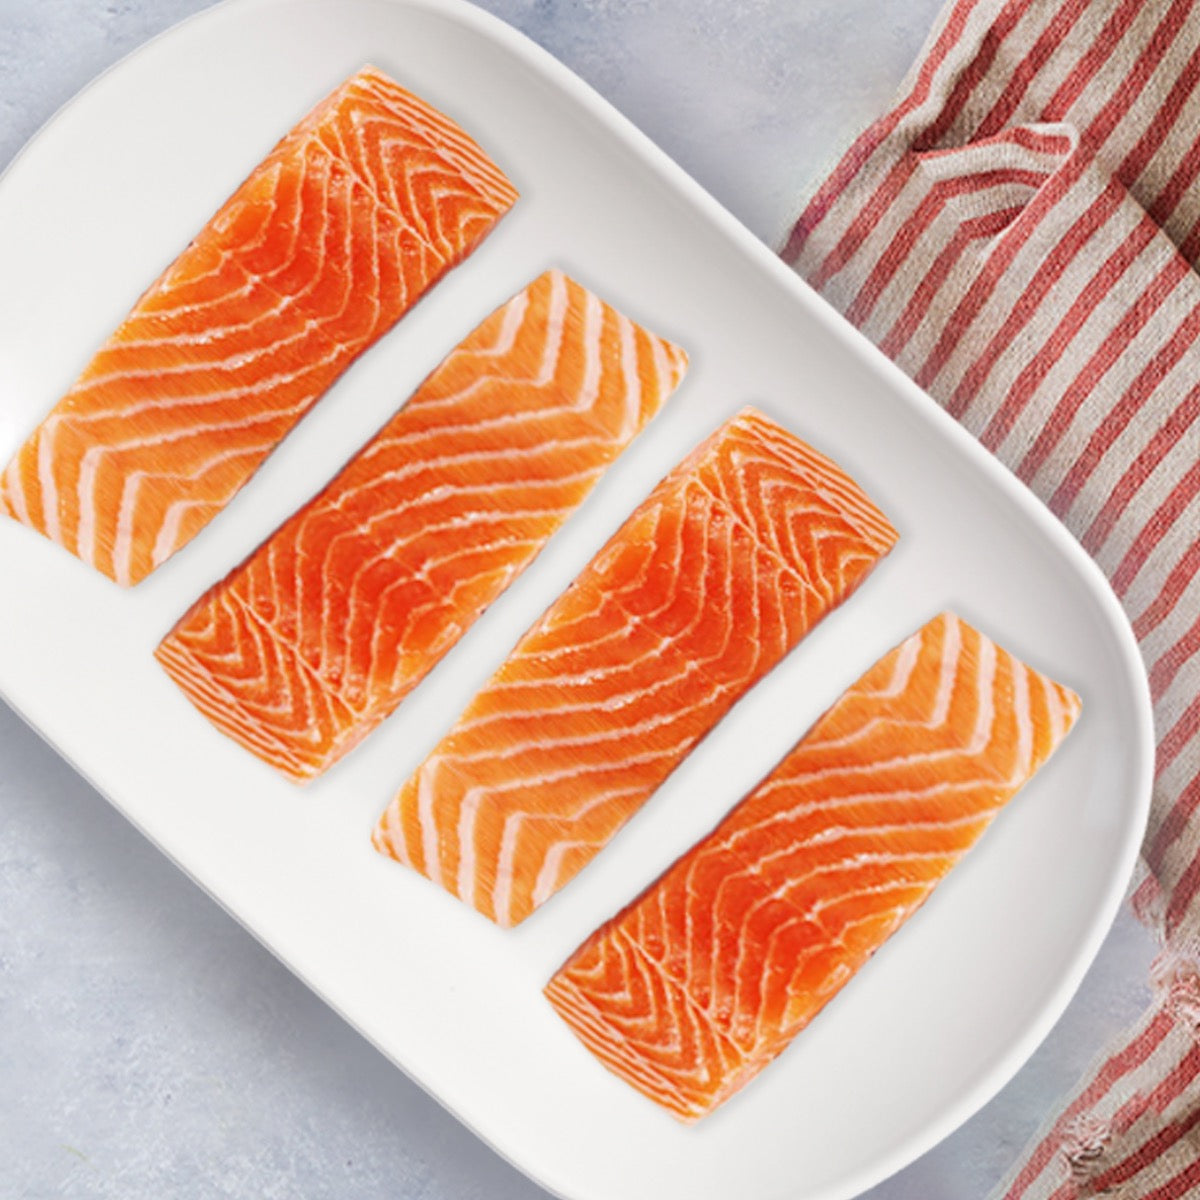 8oz Atlantic Salmon Filet (4-Pack)